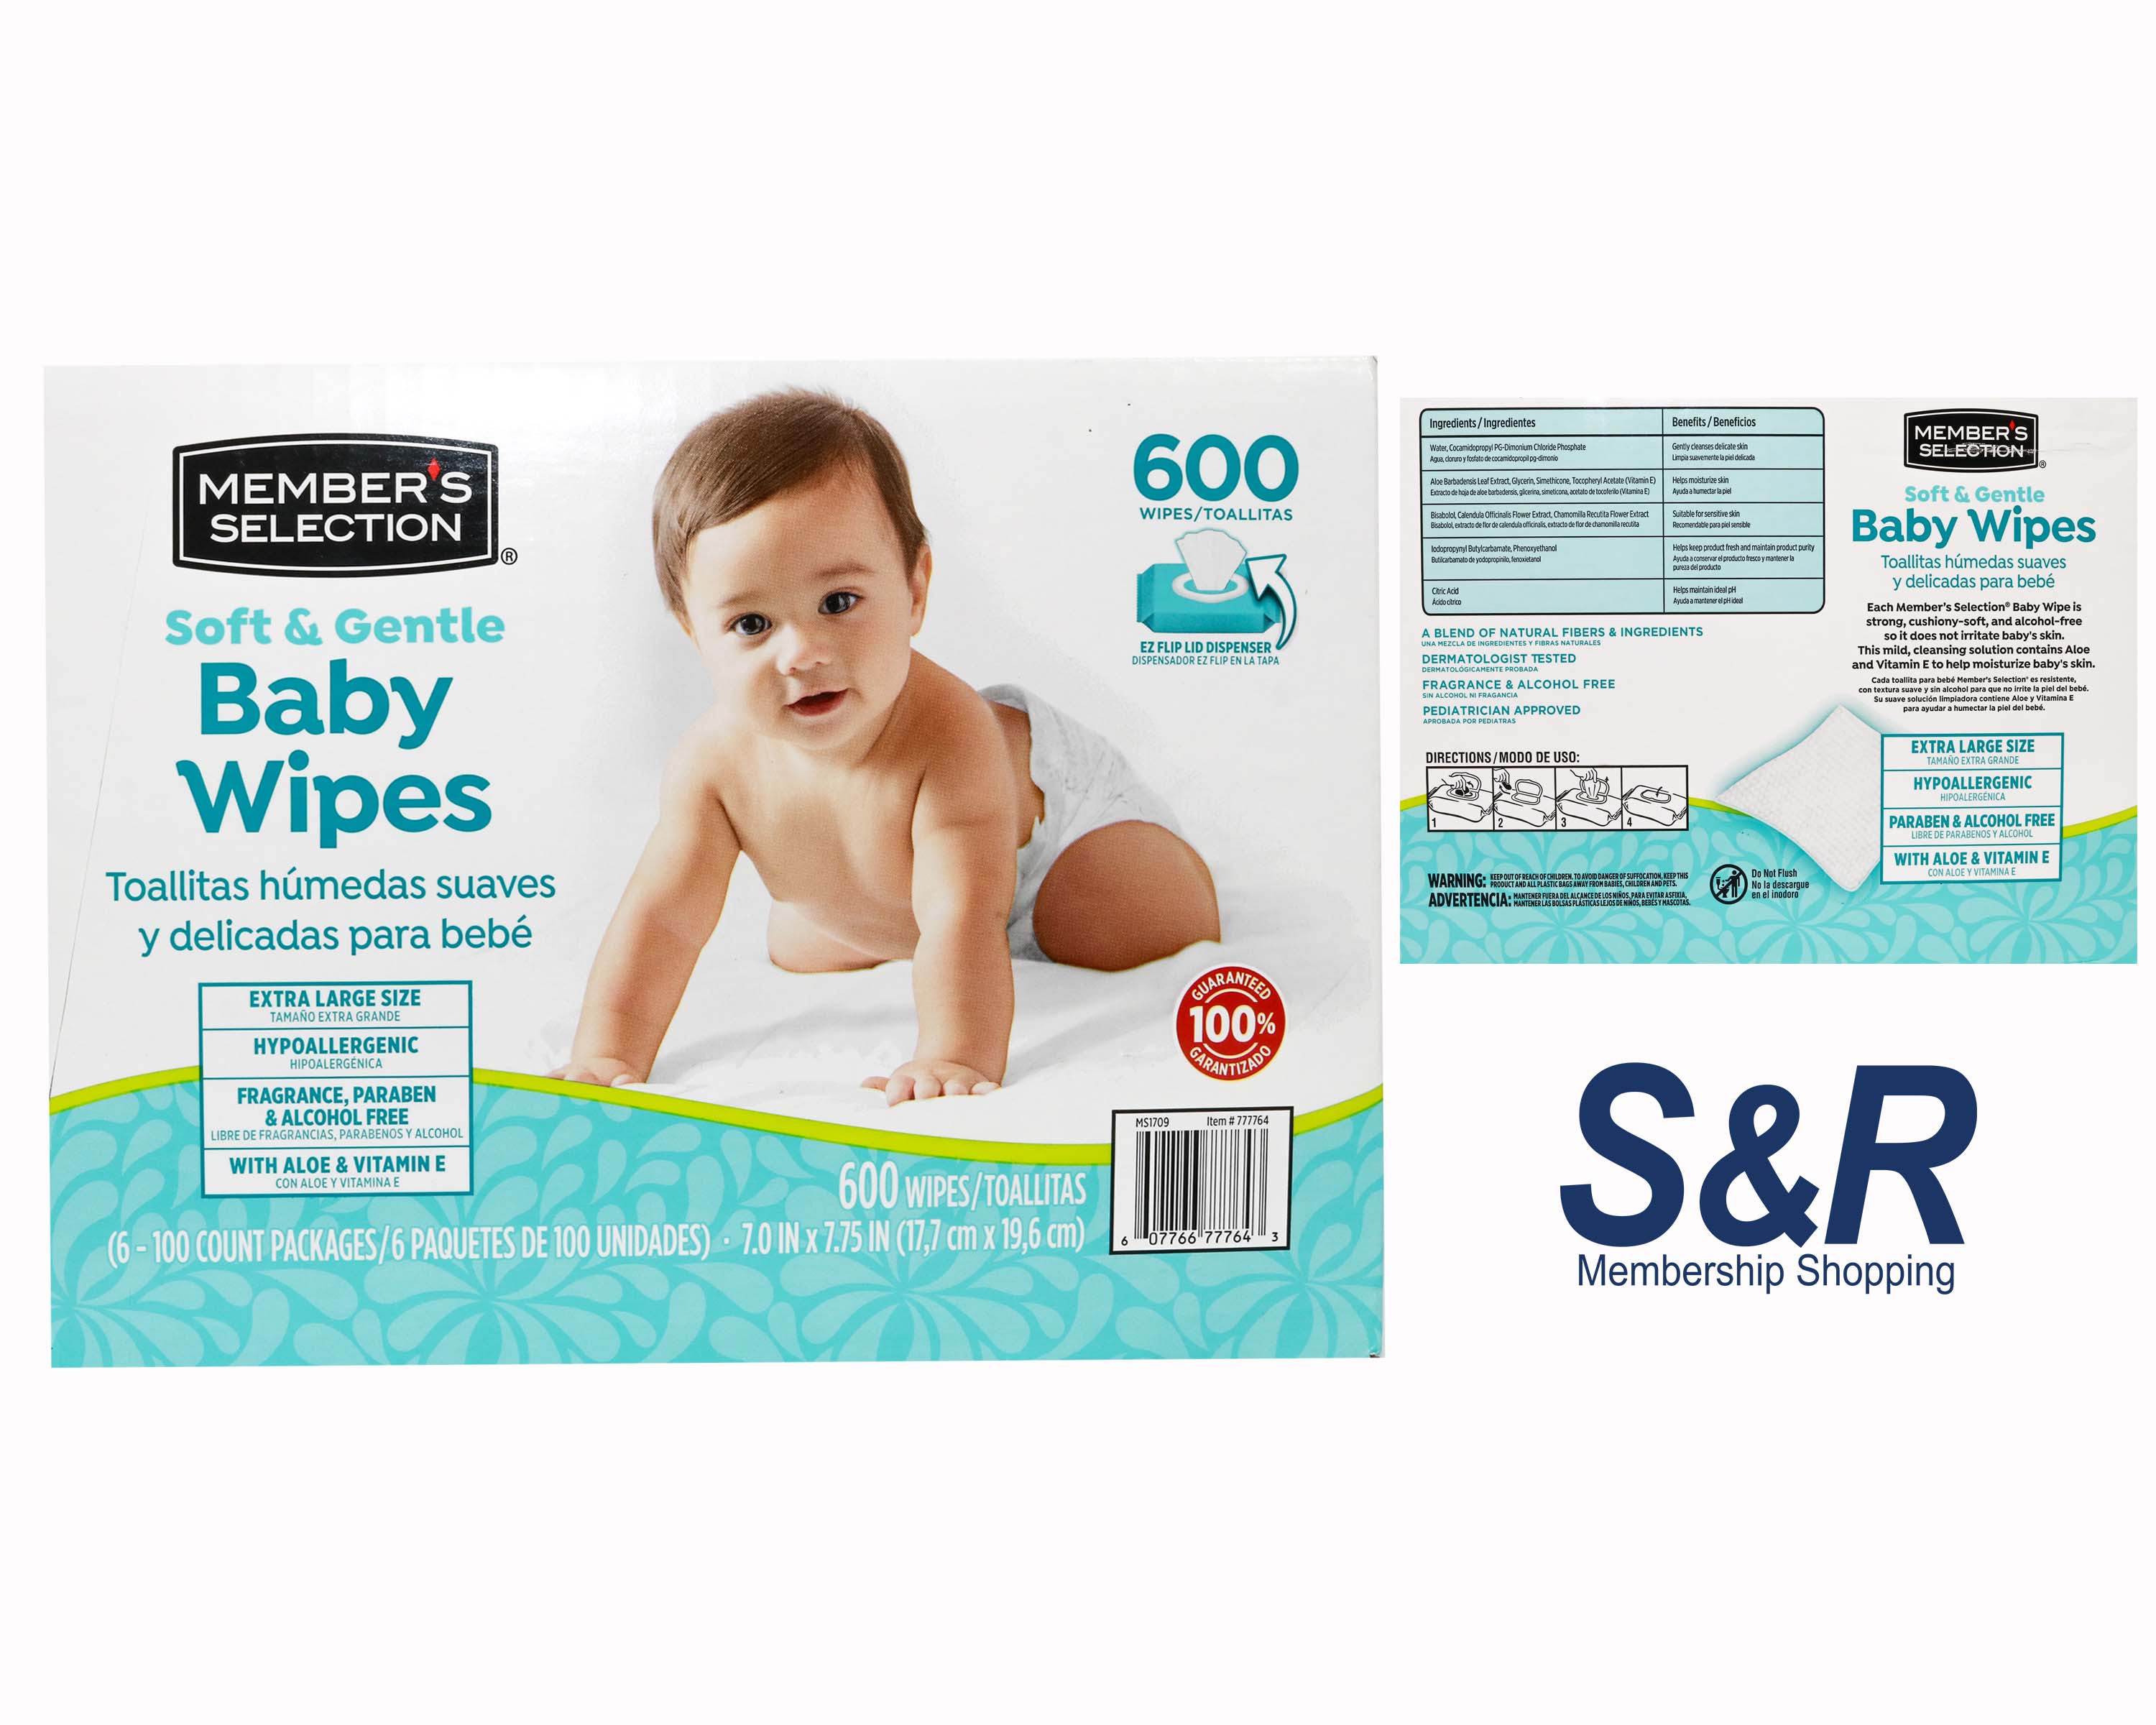 baby wipes benefits